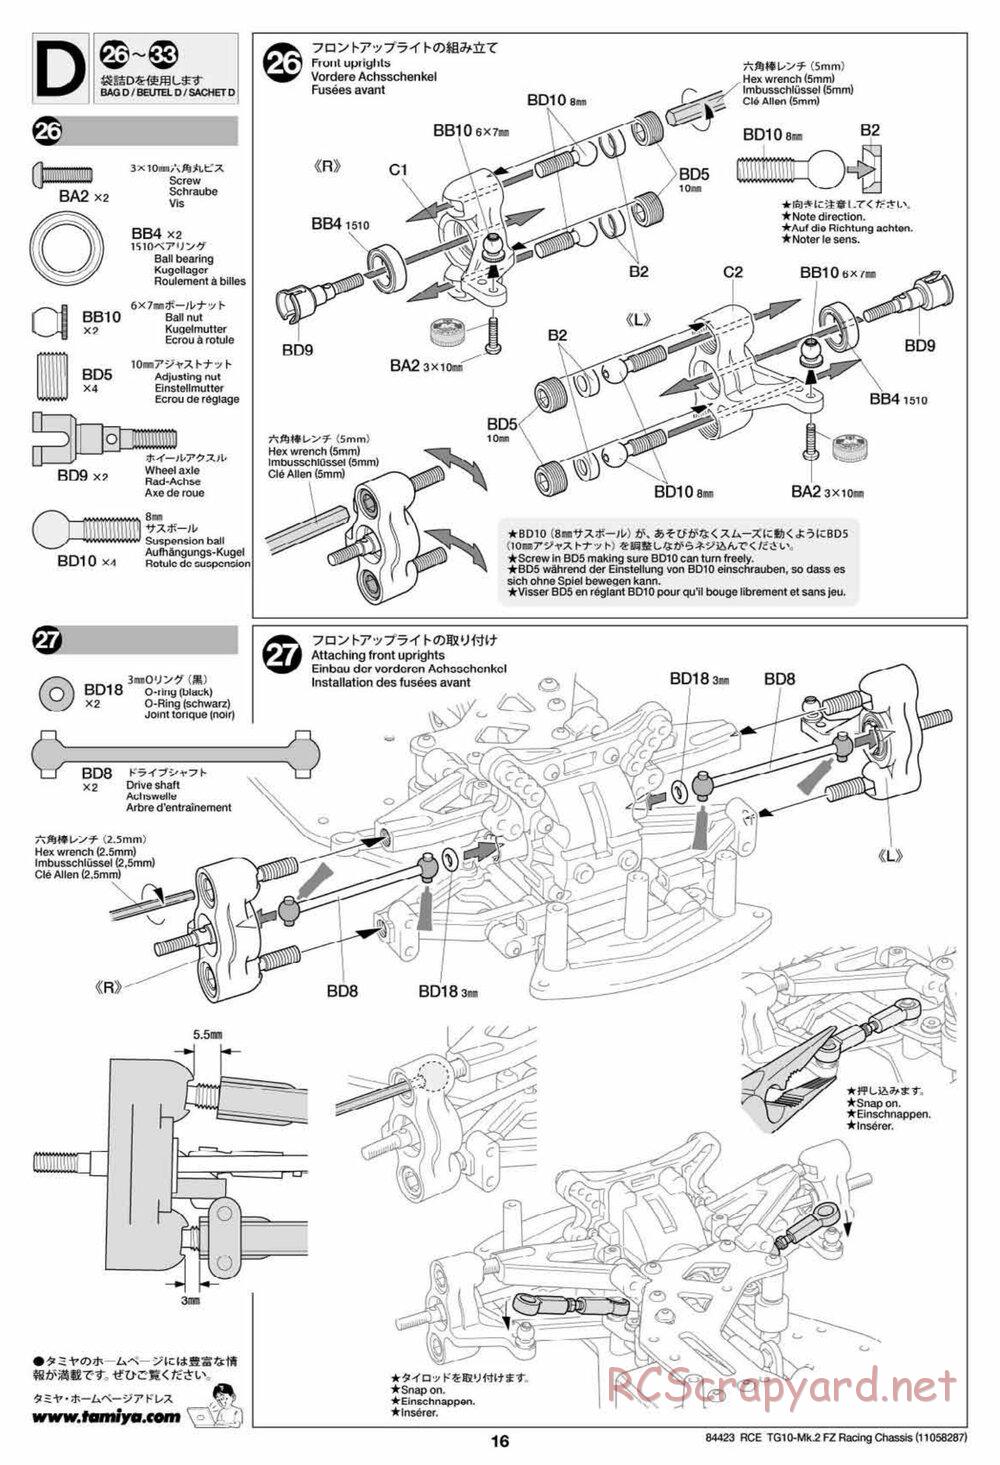 Tamiya - TG10 Mk.2 FZ Racing Chassis - Manual - Page 16